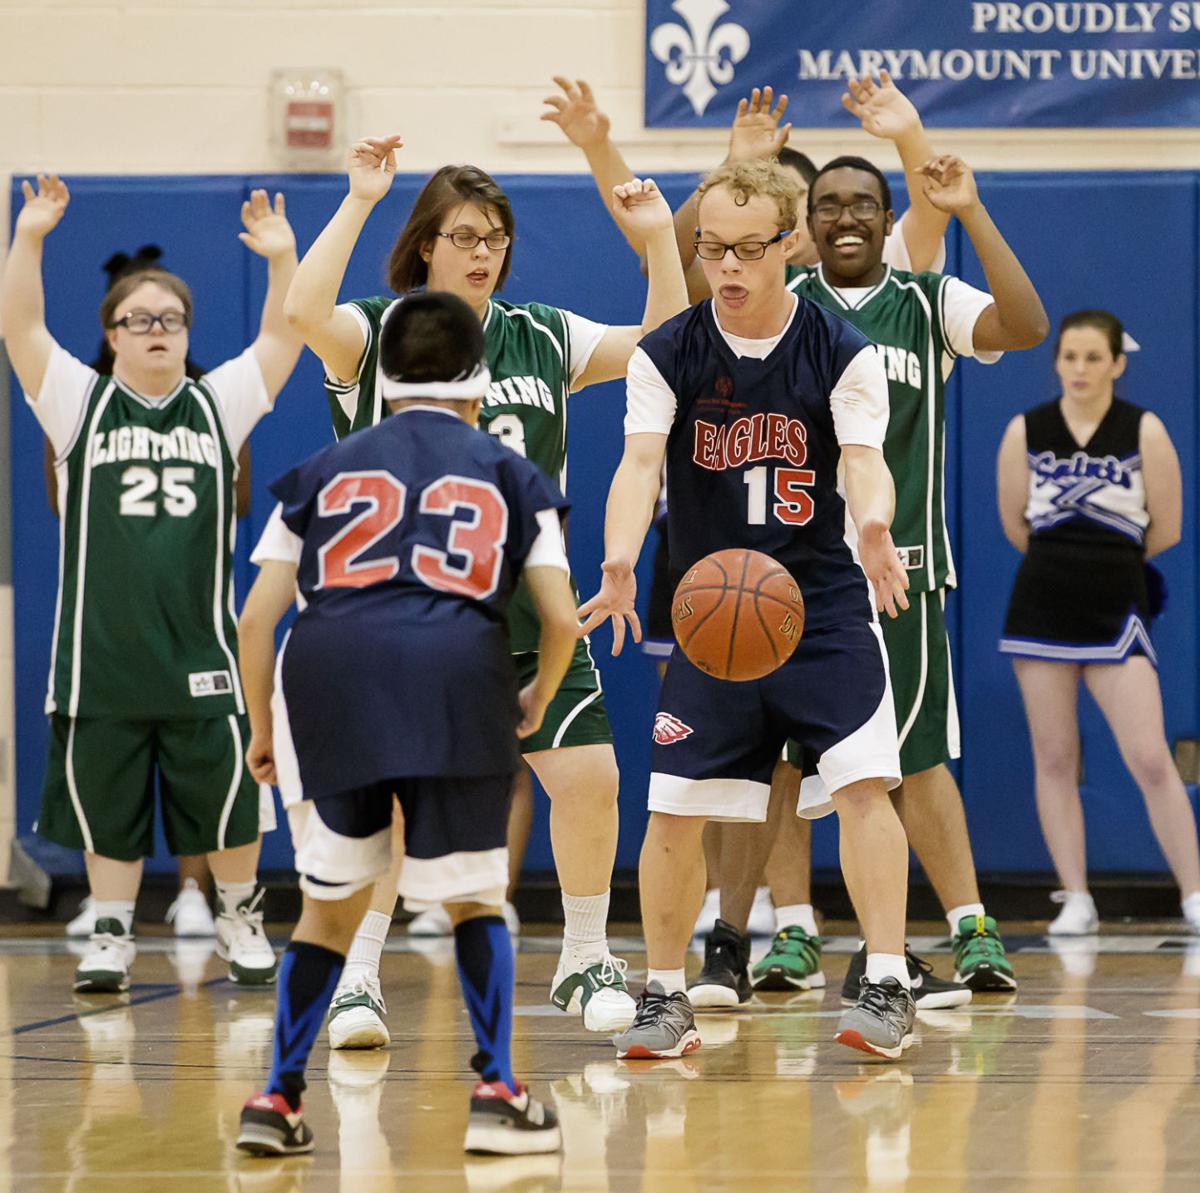 PHOTO N.Va. Special Olympics basketball tournament Headlines